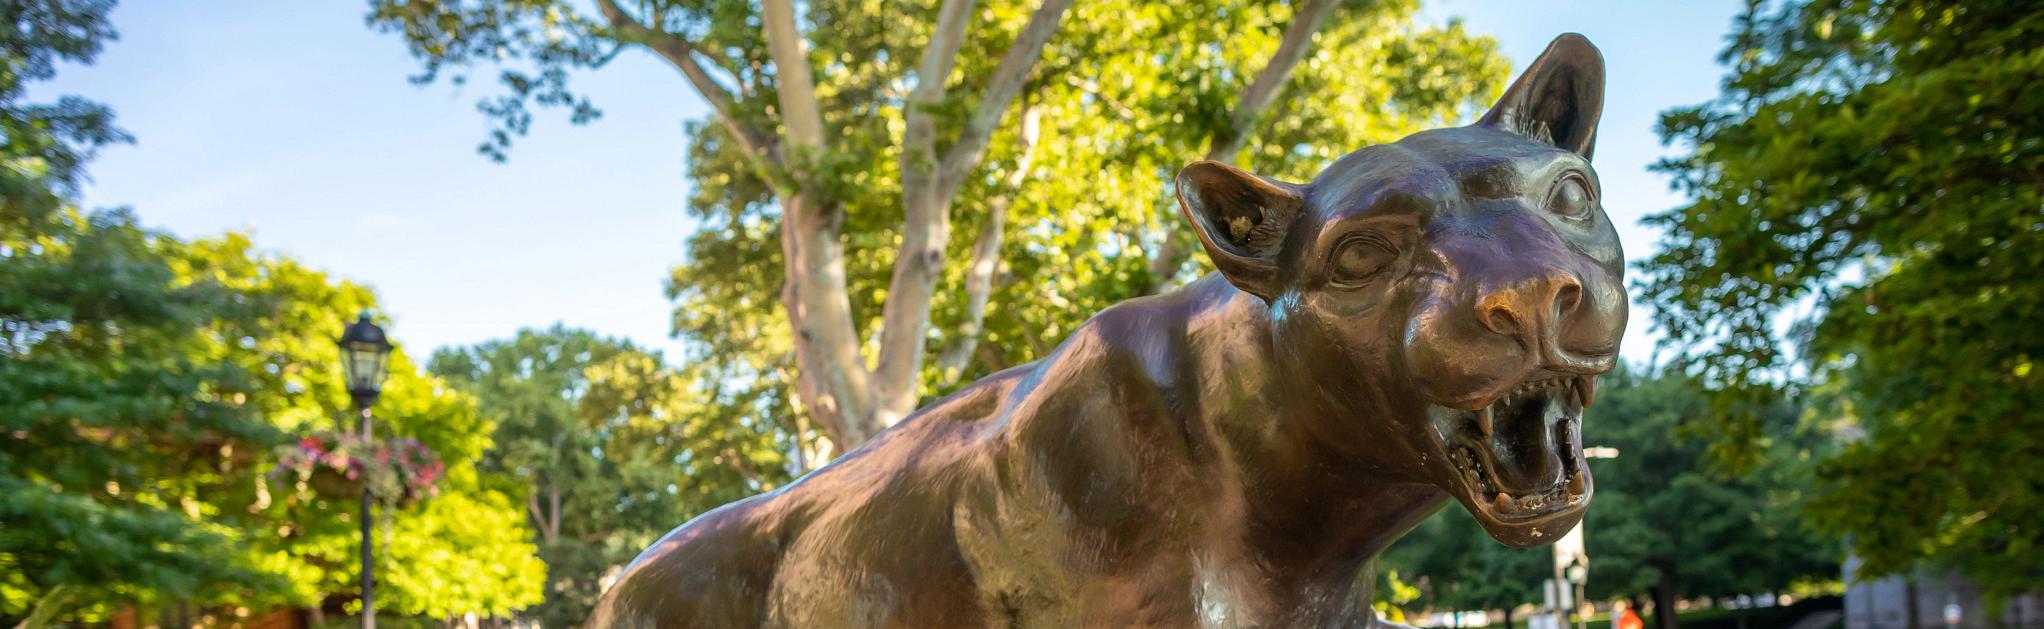 Pitt Panther statue